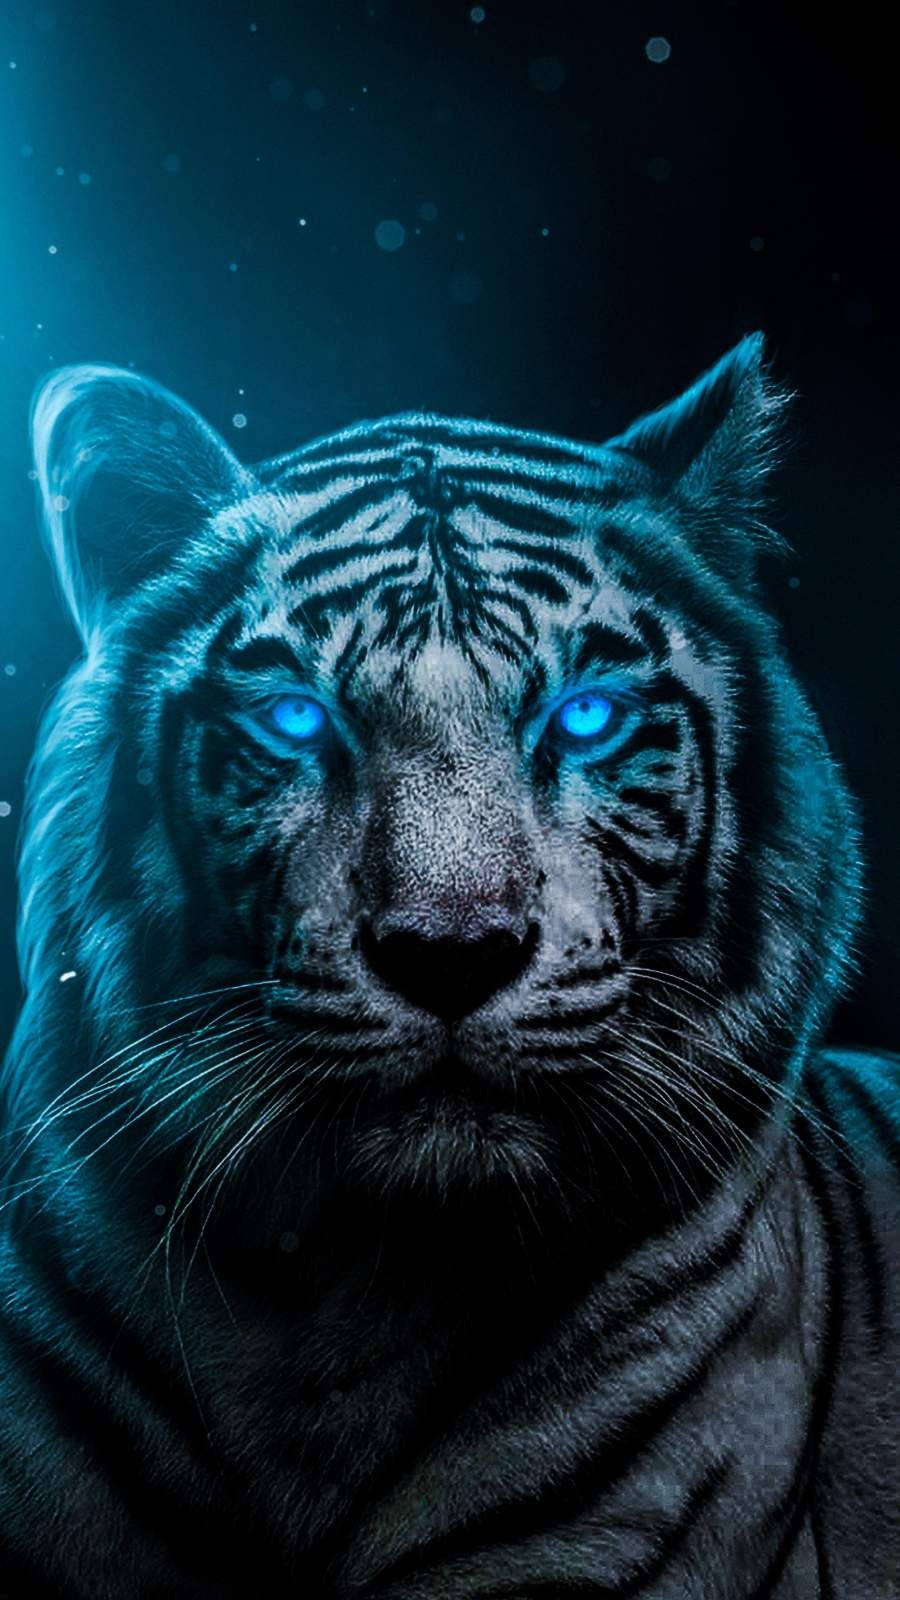 Blue Eyes Tiger Iphone Wallpaper